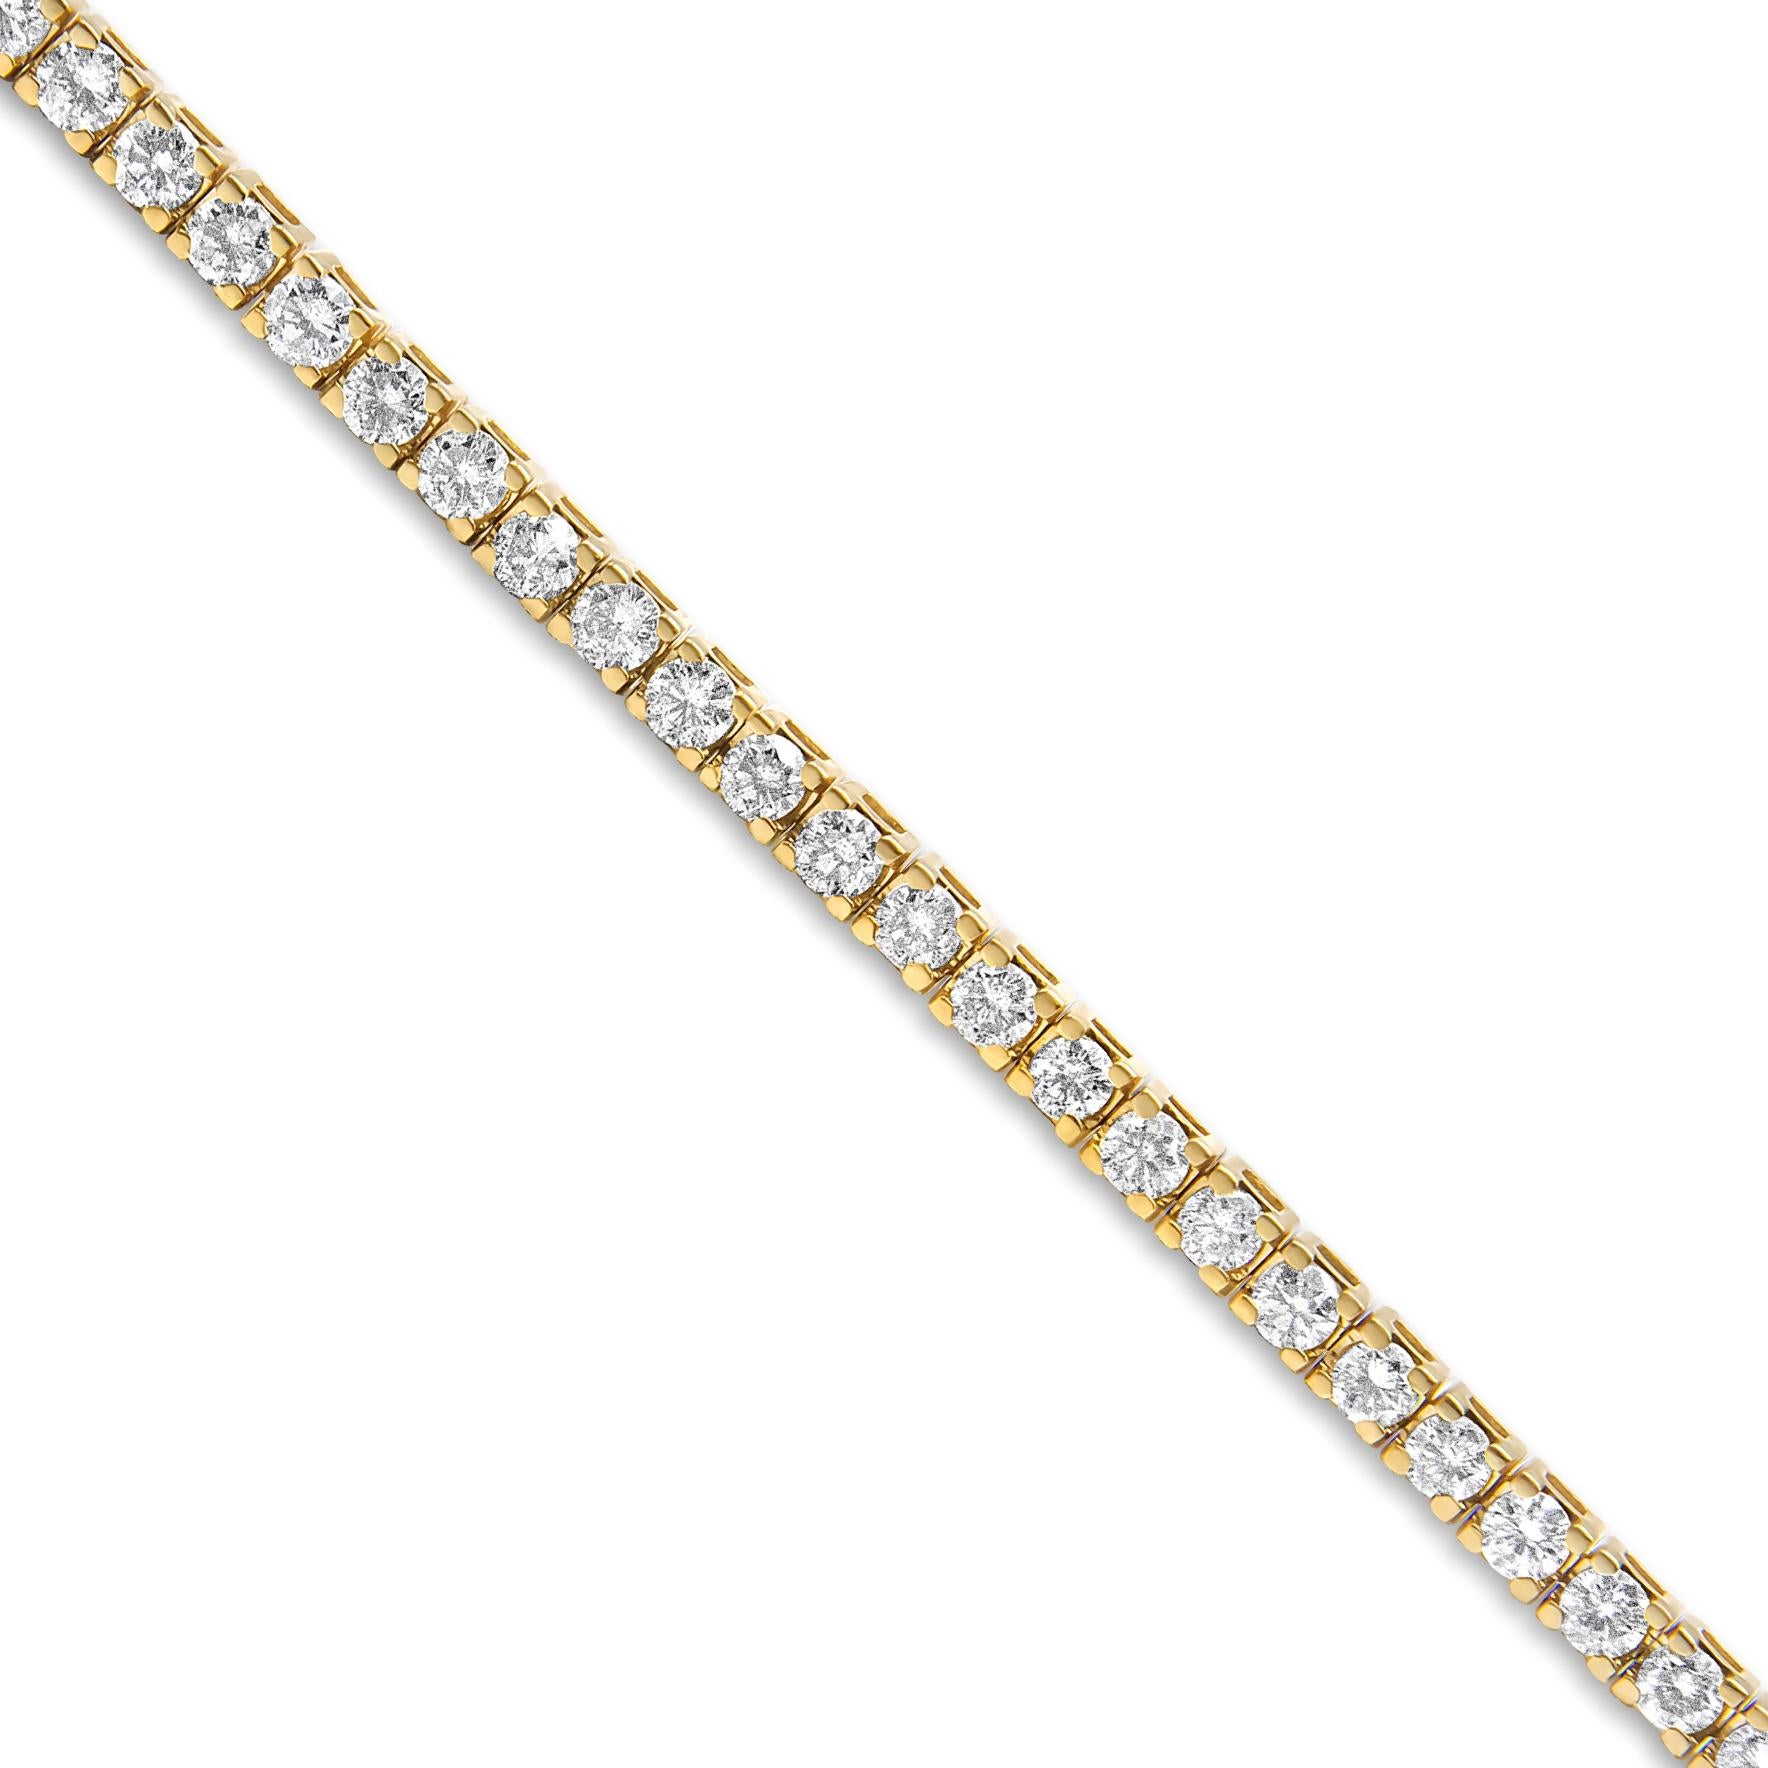 4k yellow gold tennis bracelet with 4 cttw diamonds